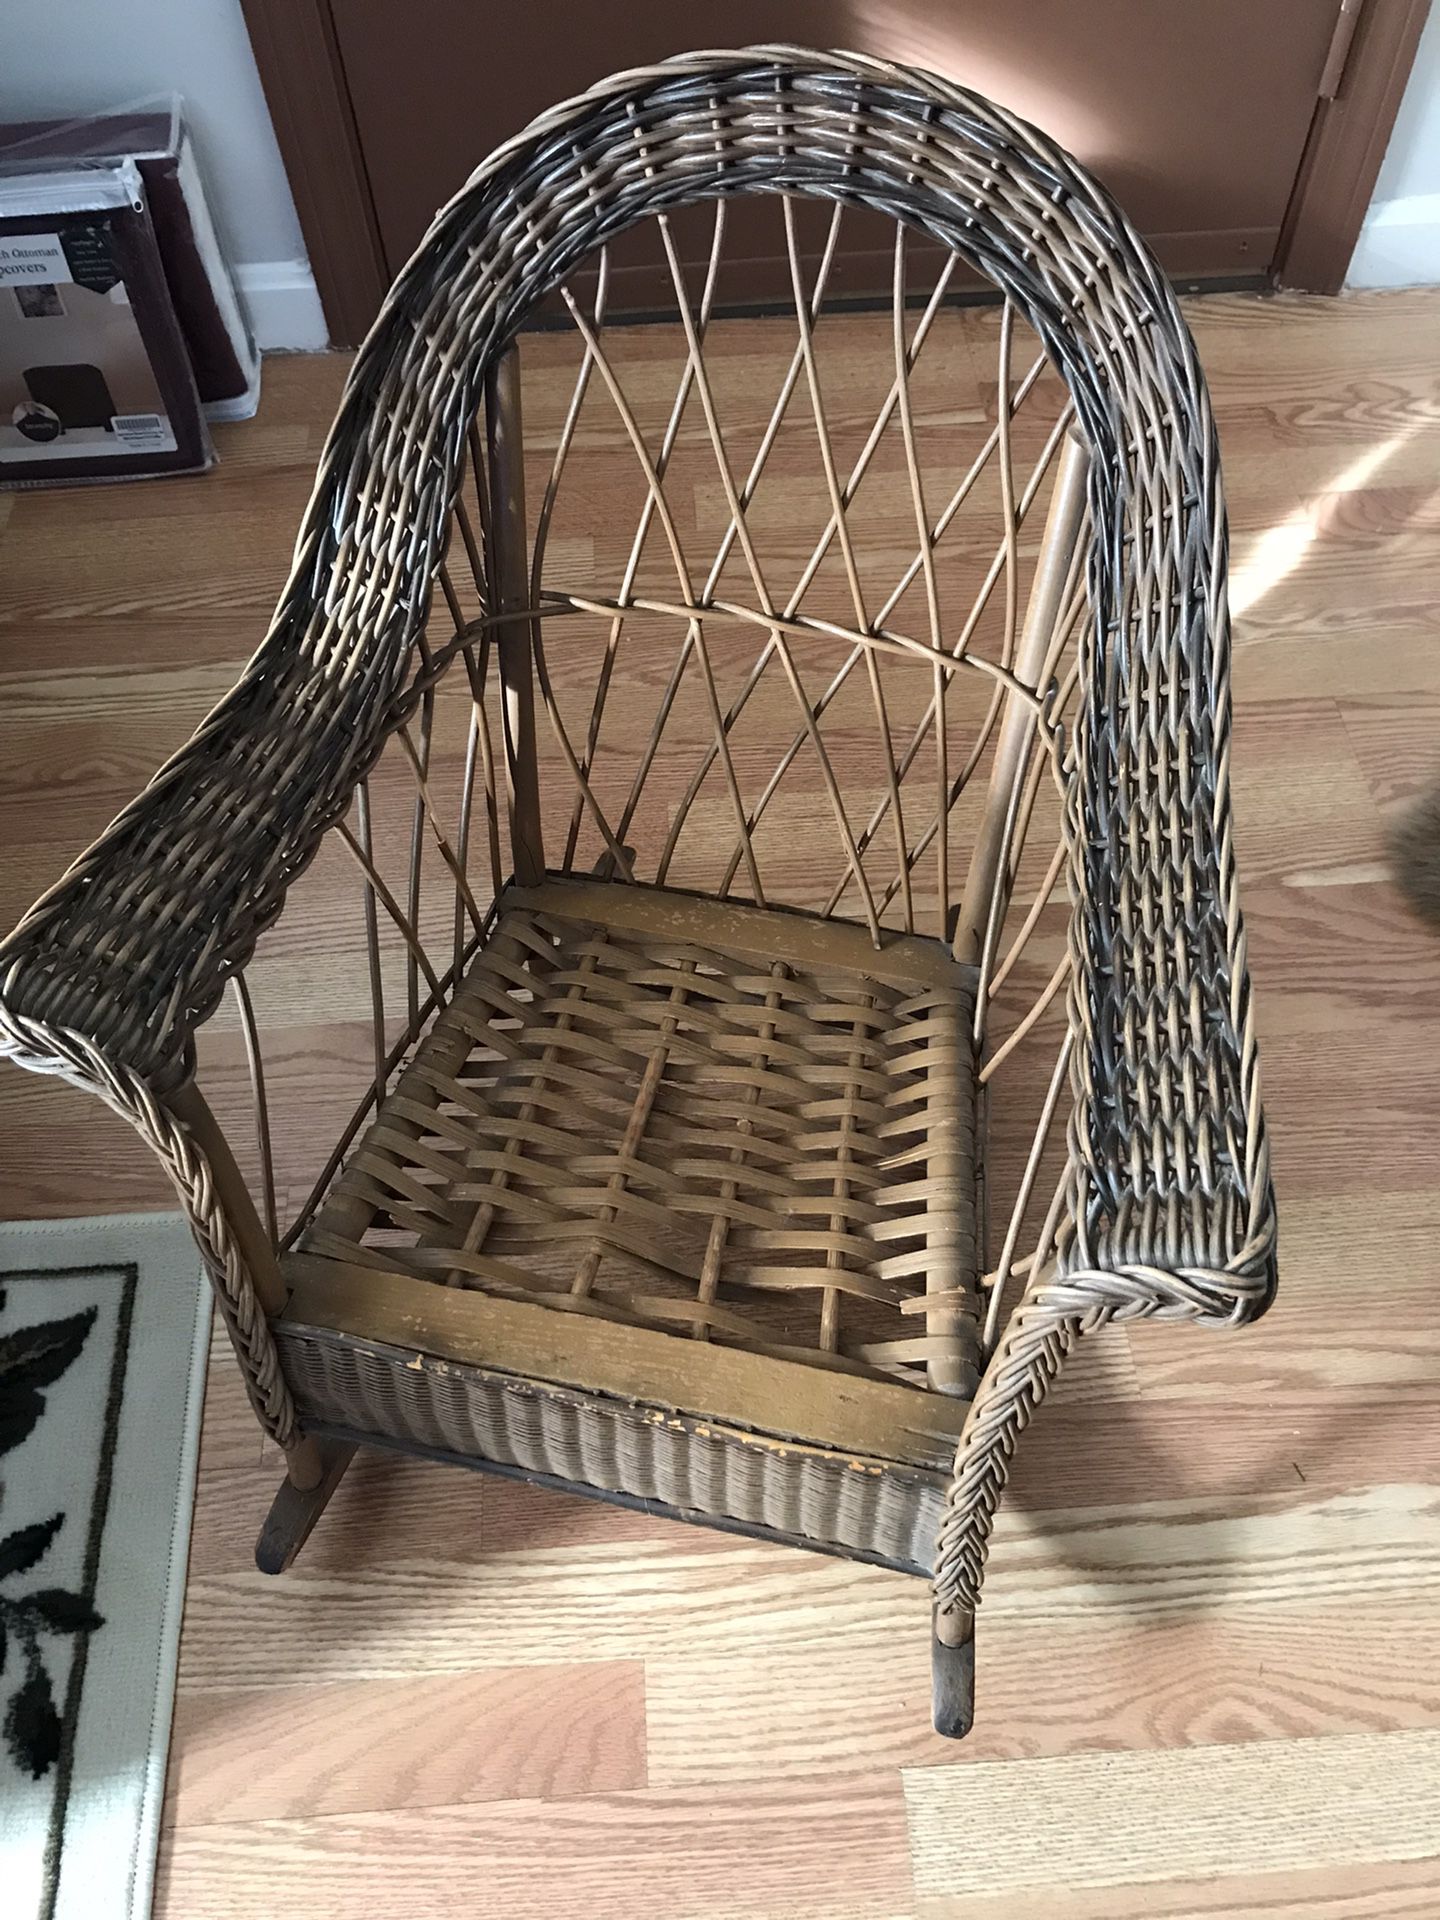 Vintage Childs Wicker Rocking Chair! 1940s